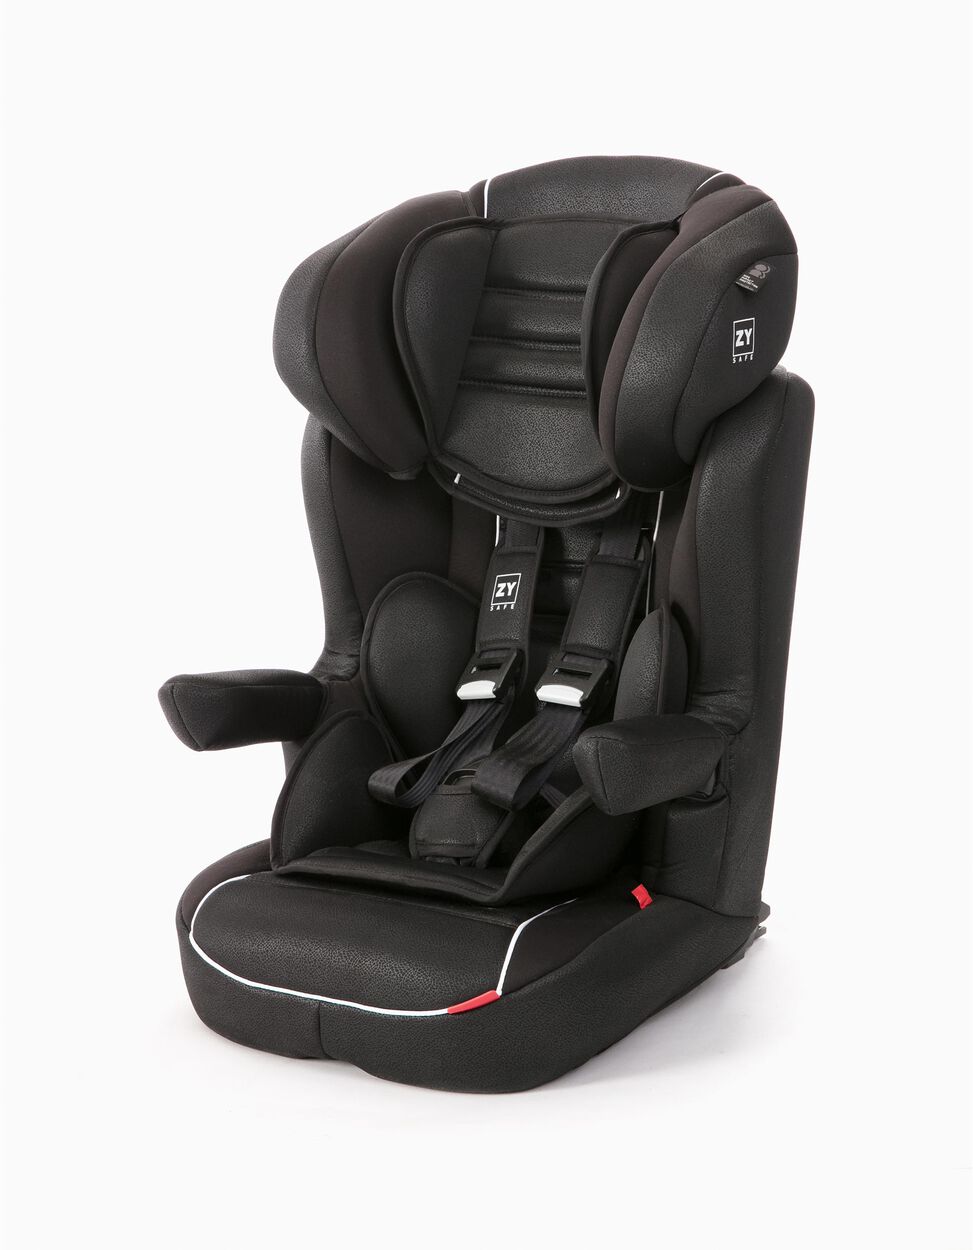 Car Seat Gr Primecare Isofix Prestige Zy Safe, Black Zippy Online Germany